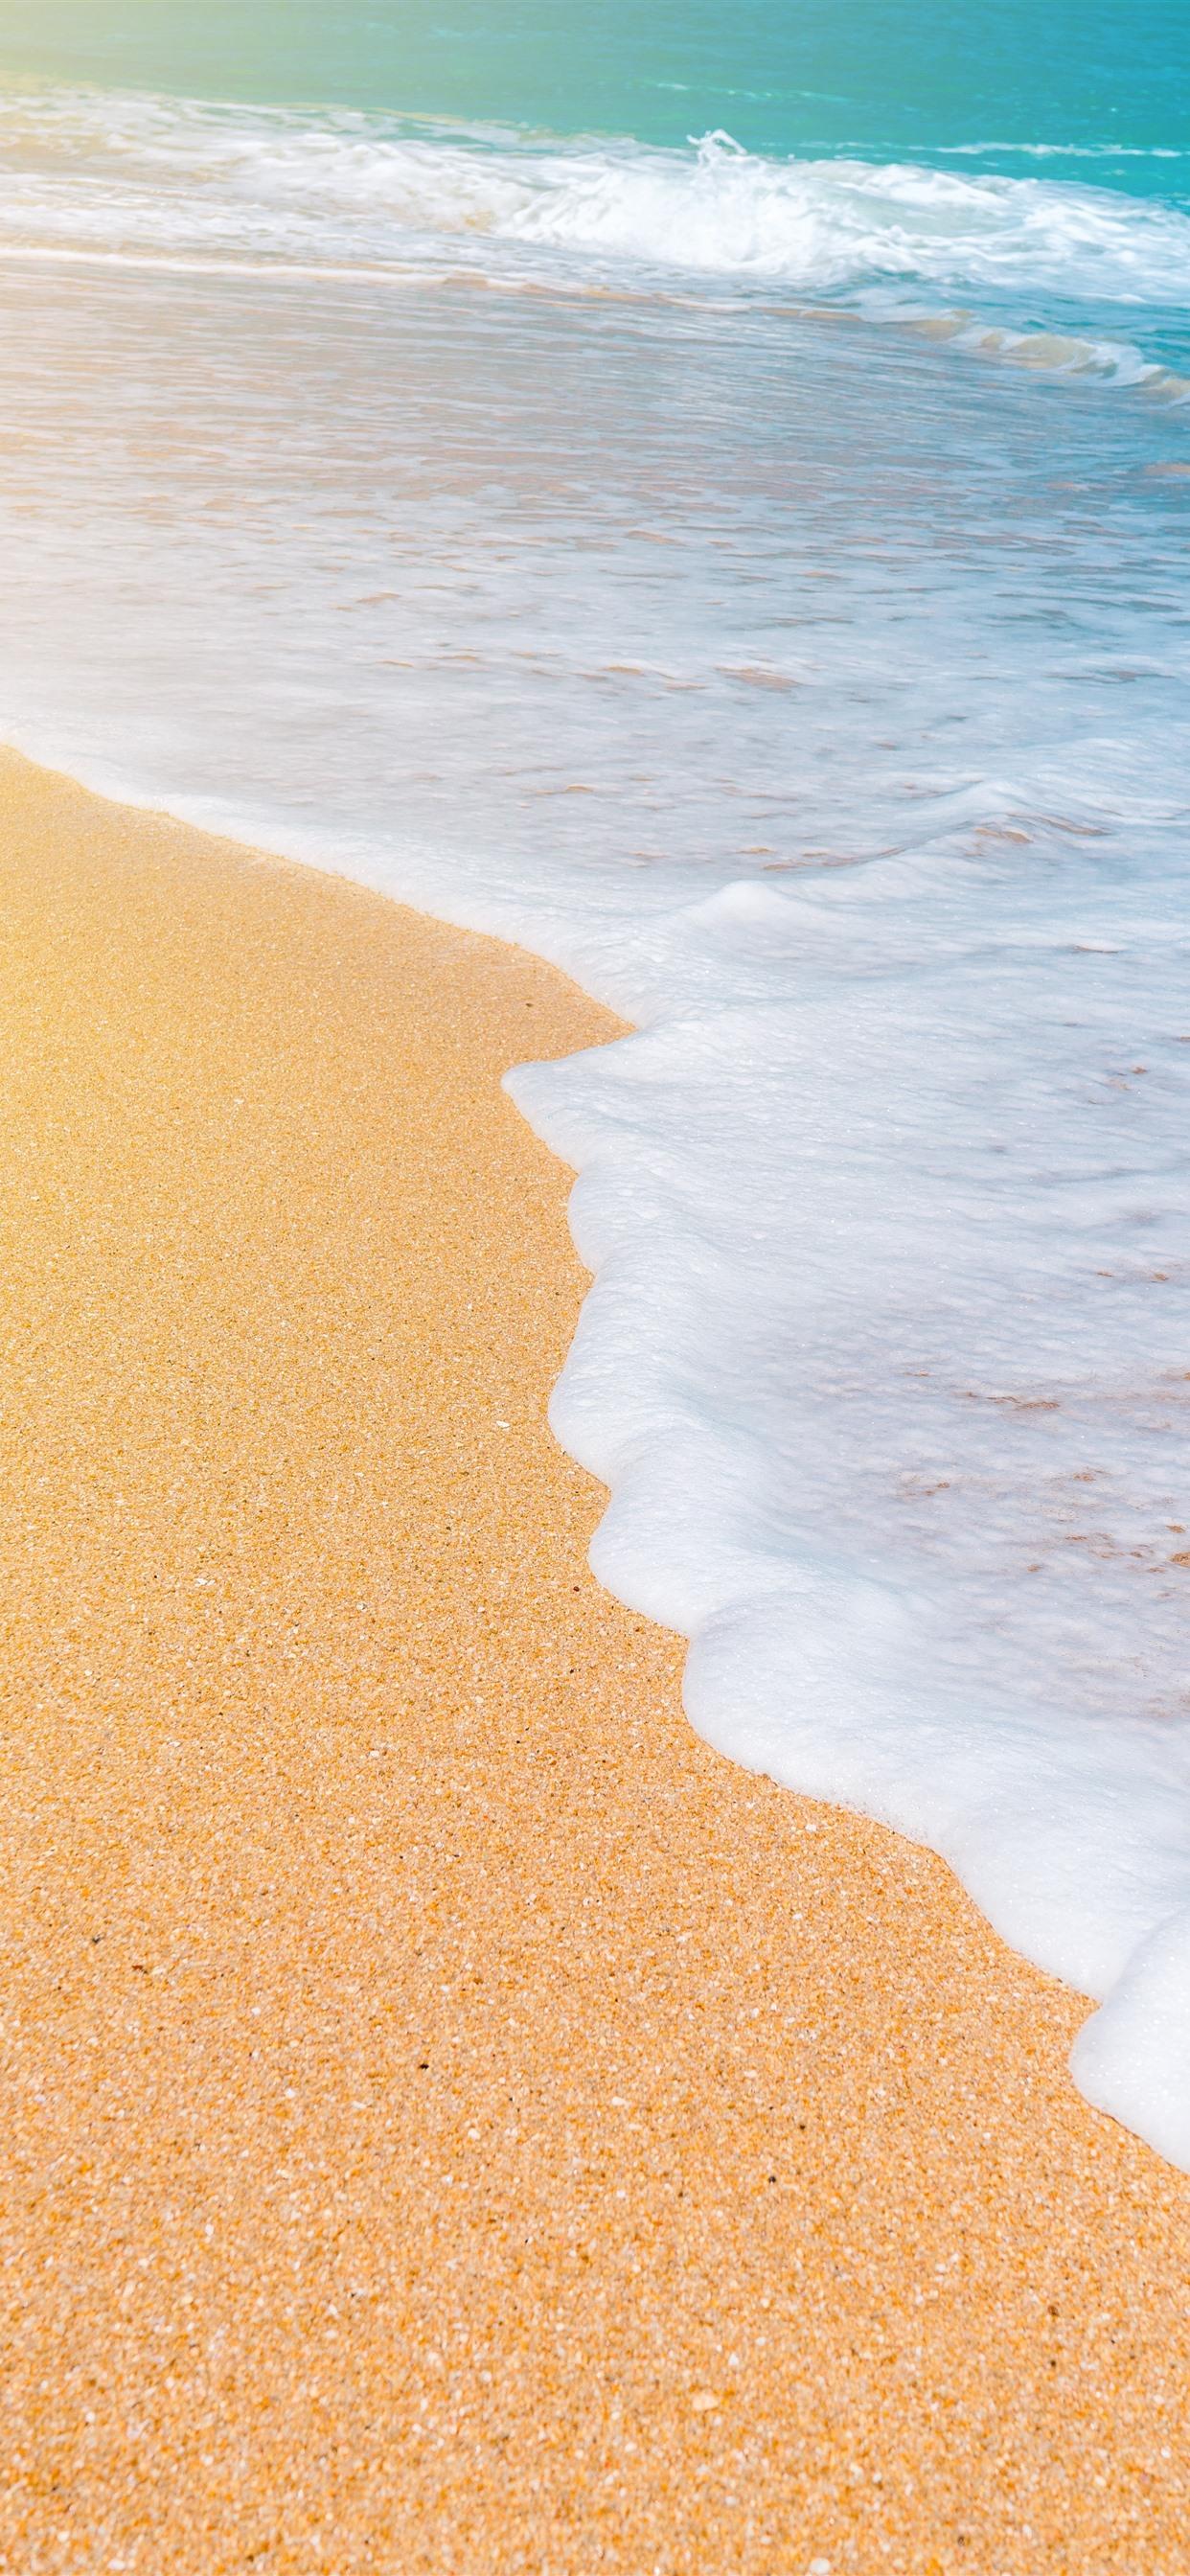 Sea, waves, foam, beach 1242x2688 iPhone XS Max wallpapers